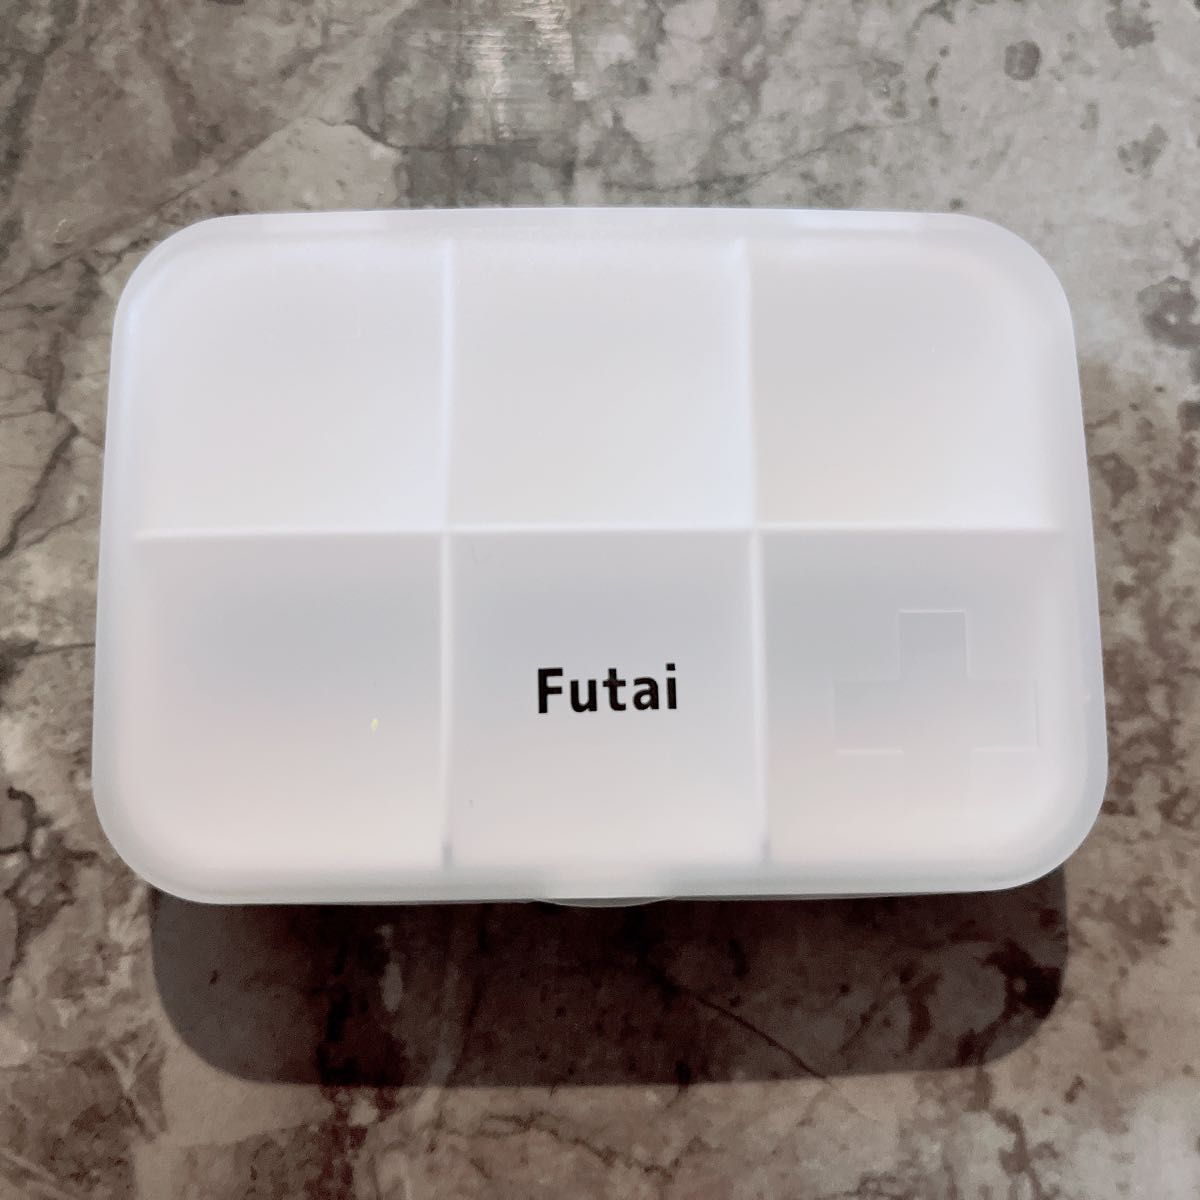 Futaiピルケース 携帯用 サプリメントケース 薬ケース